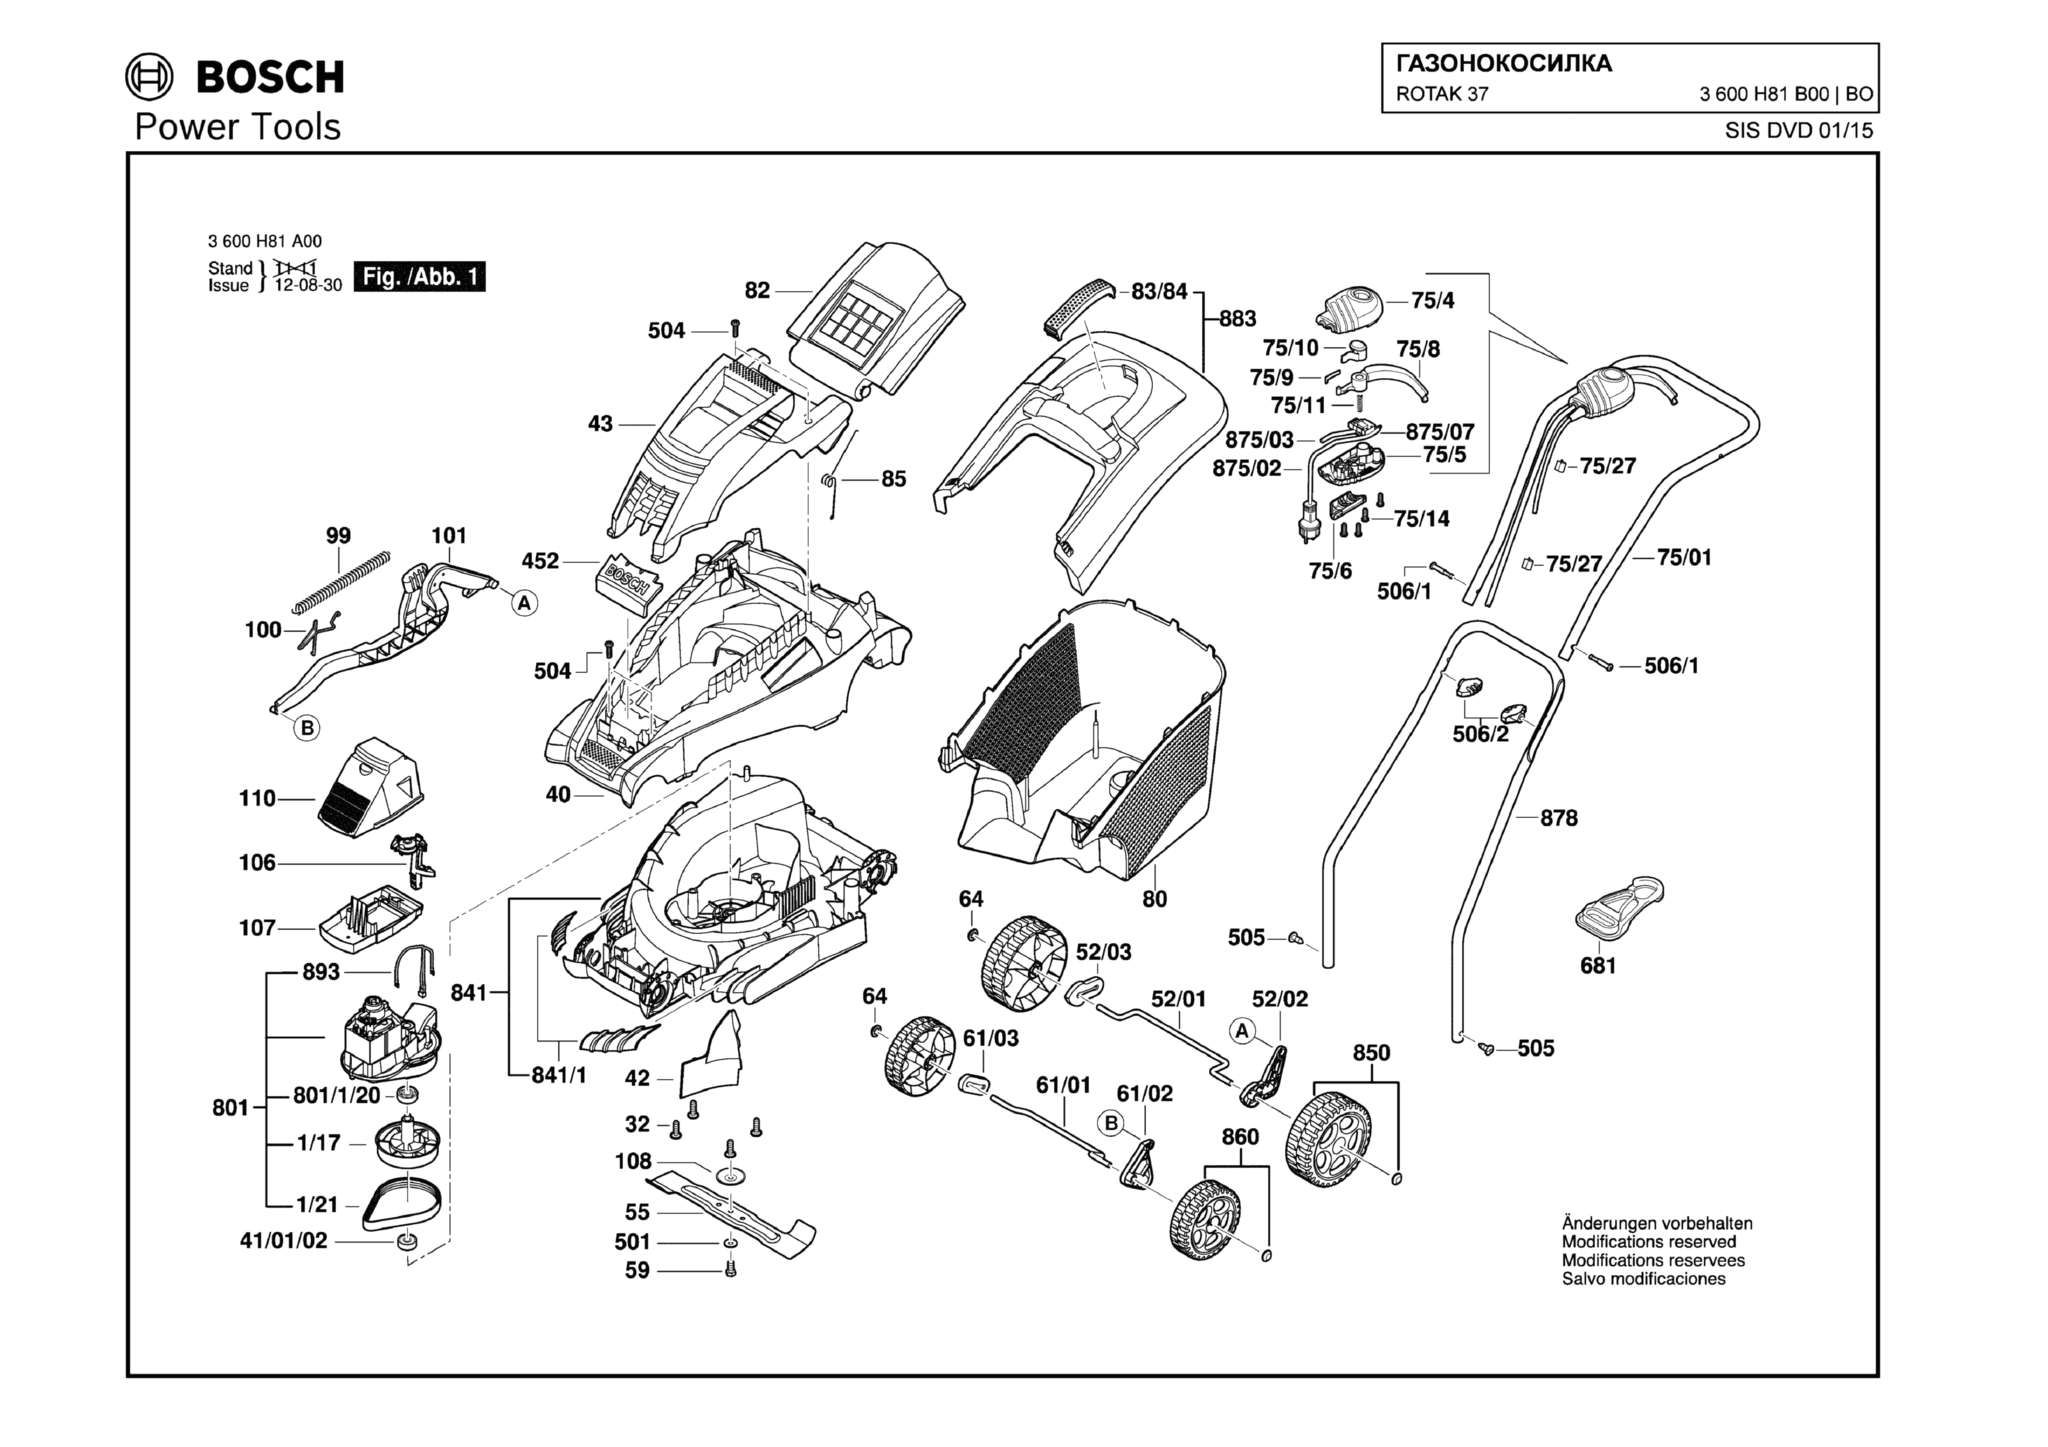 Запчасти, схема и деталировка Bosch ROTAK 37 (ТИП 3600H81B00)